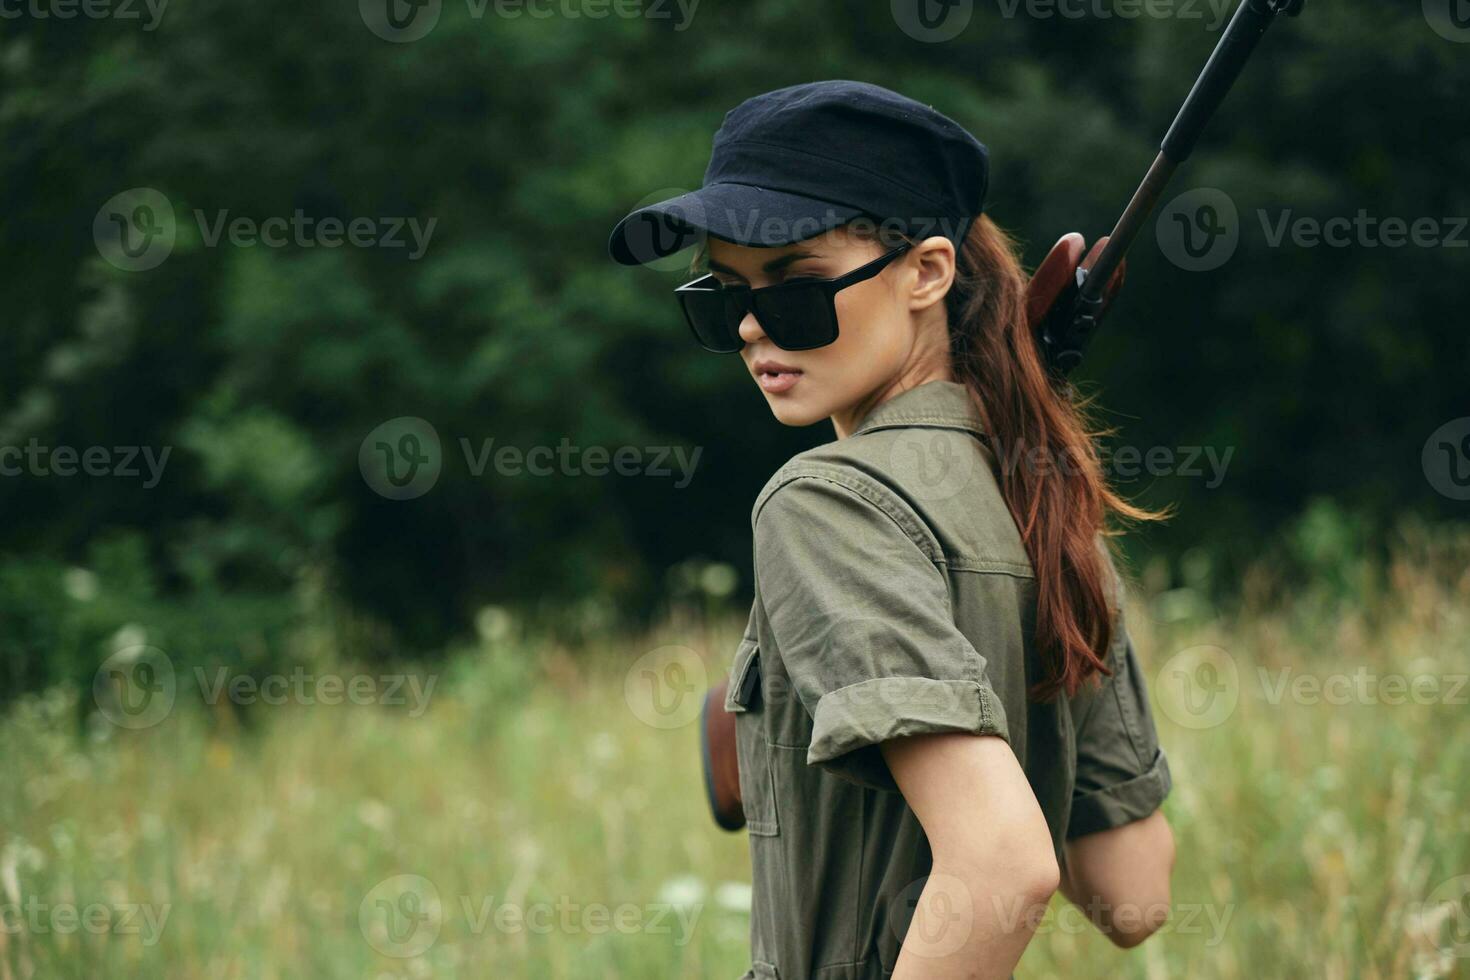 donna occhiali da sole fucile da caccia verde tuta fresco aria foto